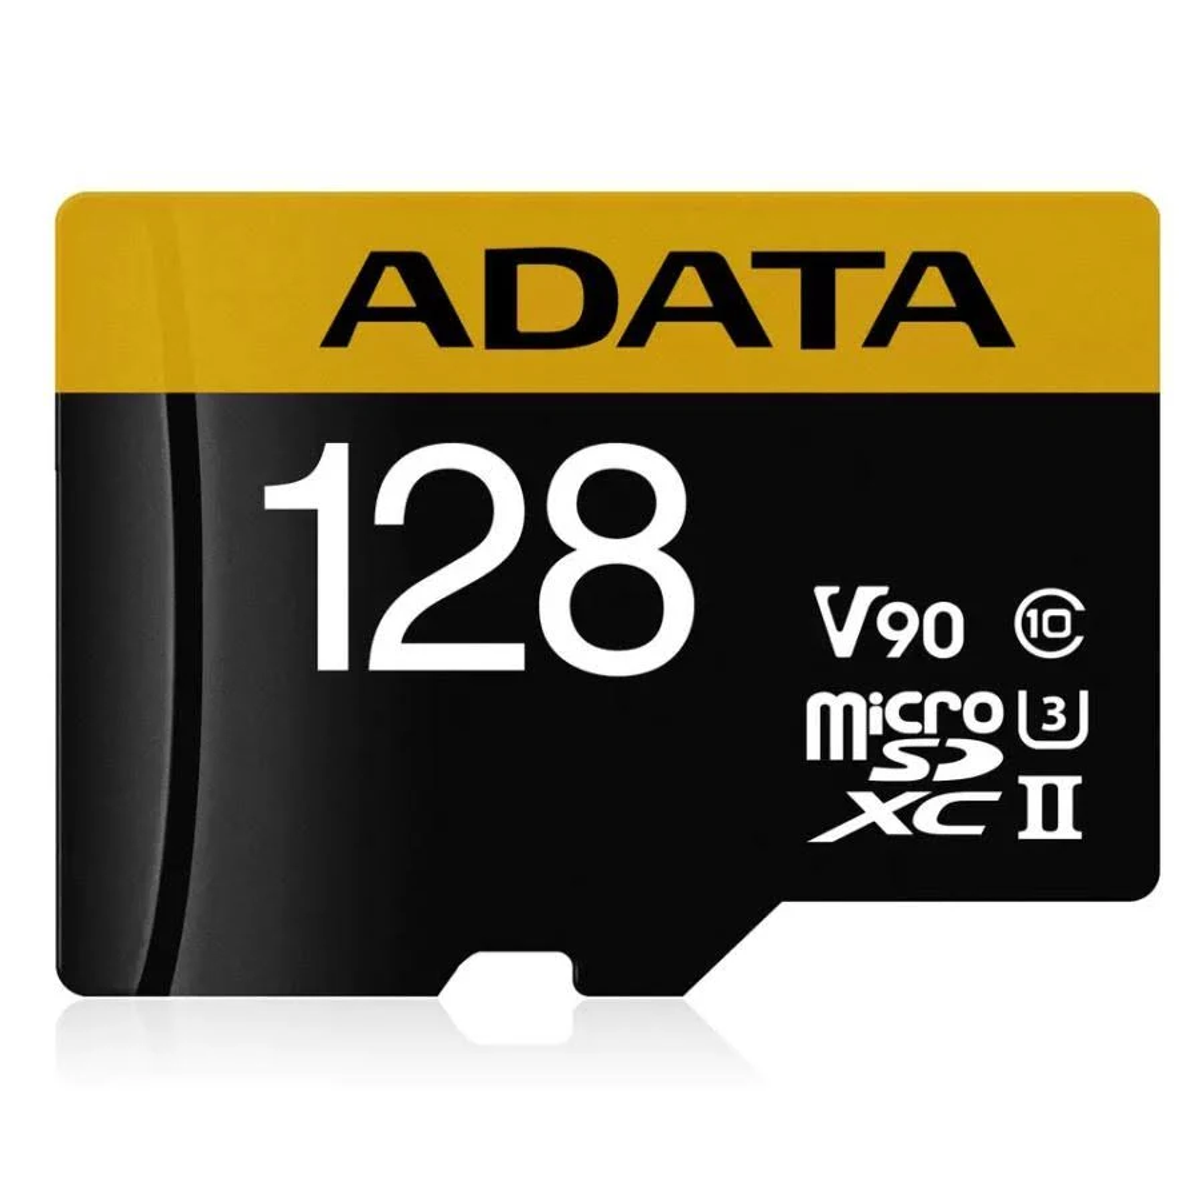 128 275 Micro-SDXC, ADATA MB/s Speicherkarte, GB, SDXC, Micro-SD, AUSDX128GUII3CL10-CA1, SD